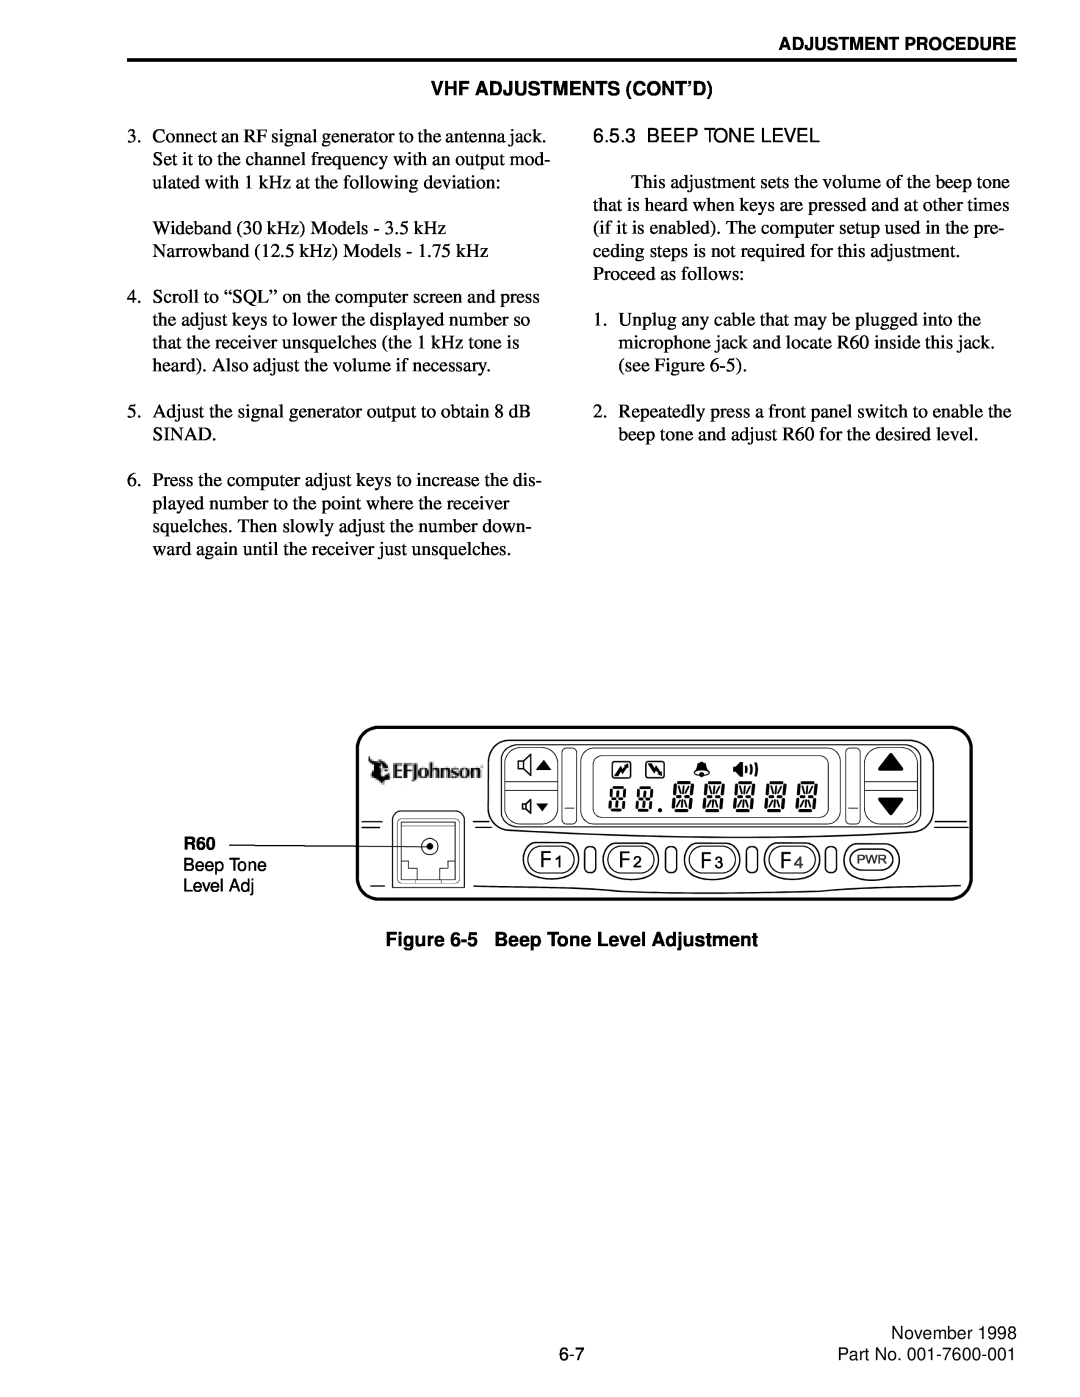 EFJohnson 764X, 761X service manual 5Beep Tone Level Adjustment, Vhf Adjustments Cont’D 